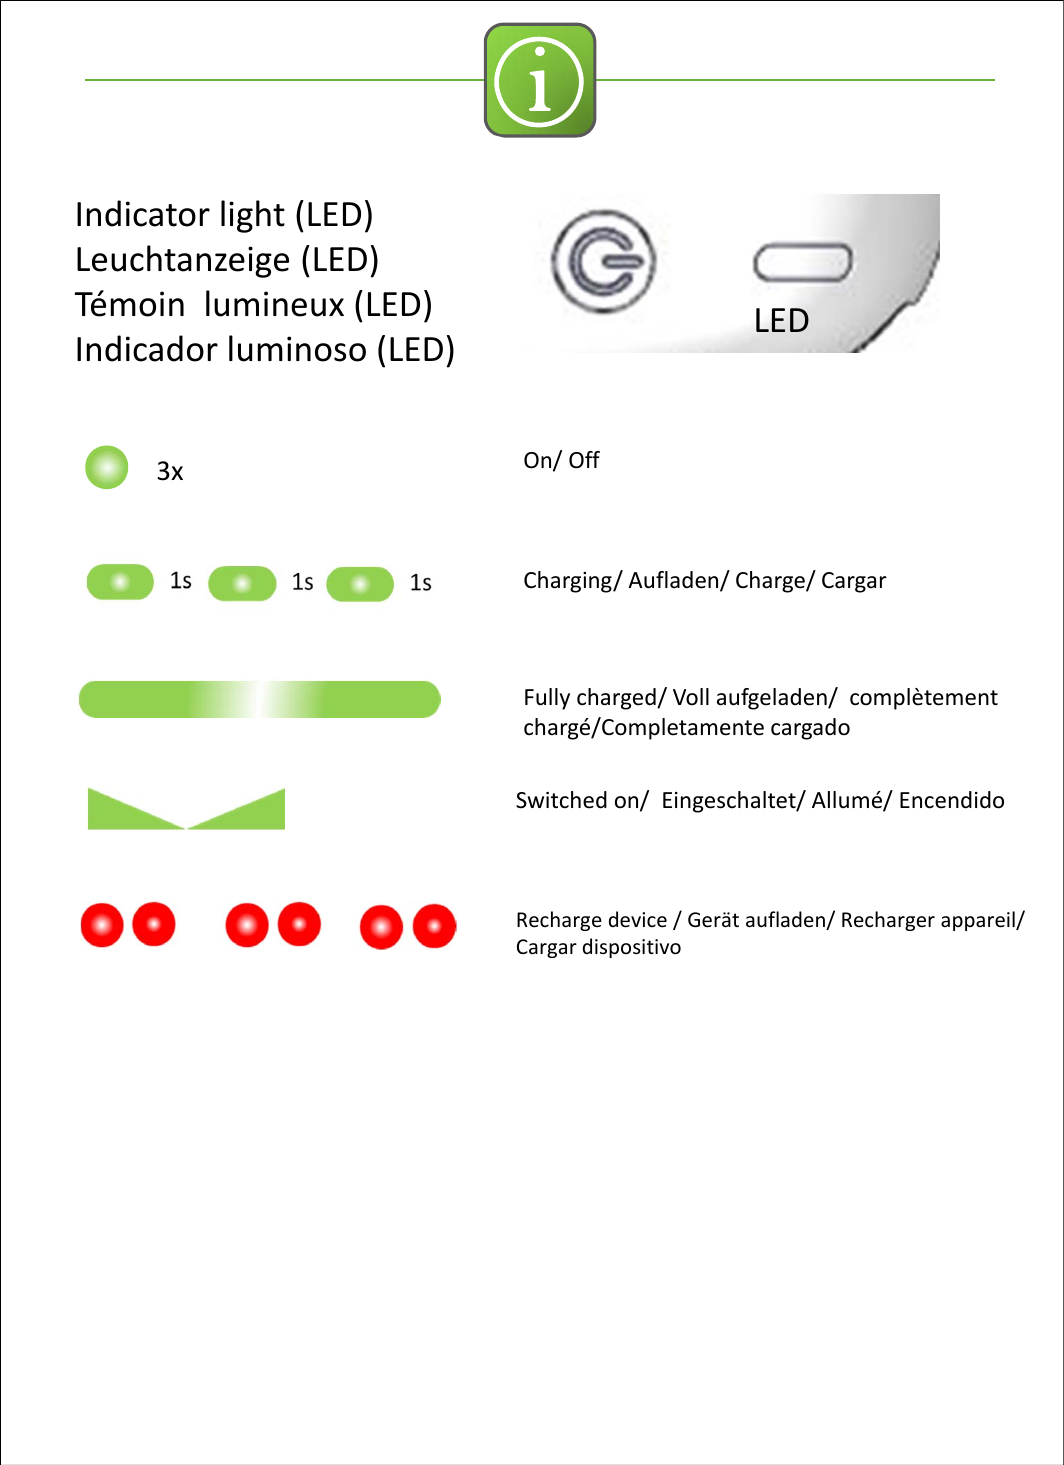 iIndicator light(LED)Leuchtanzeige(LED)Témoin lumineux (LED)Indicador luminoso (LED)On/Off3xCharging/Aufladen/Charge/CargarFullycharged/Voll aufgeladen/complètementchargé/Completamente cargadoSwitchedon/Eingeschaltet/Allumé/EncendidoRechargedevice/Gerät aufladen/Rechargerappareil/Cargar dispositivoLED